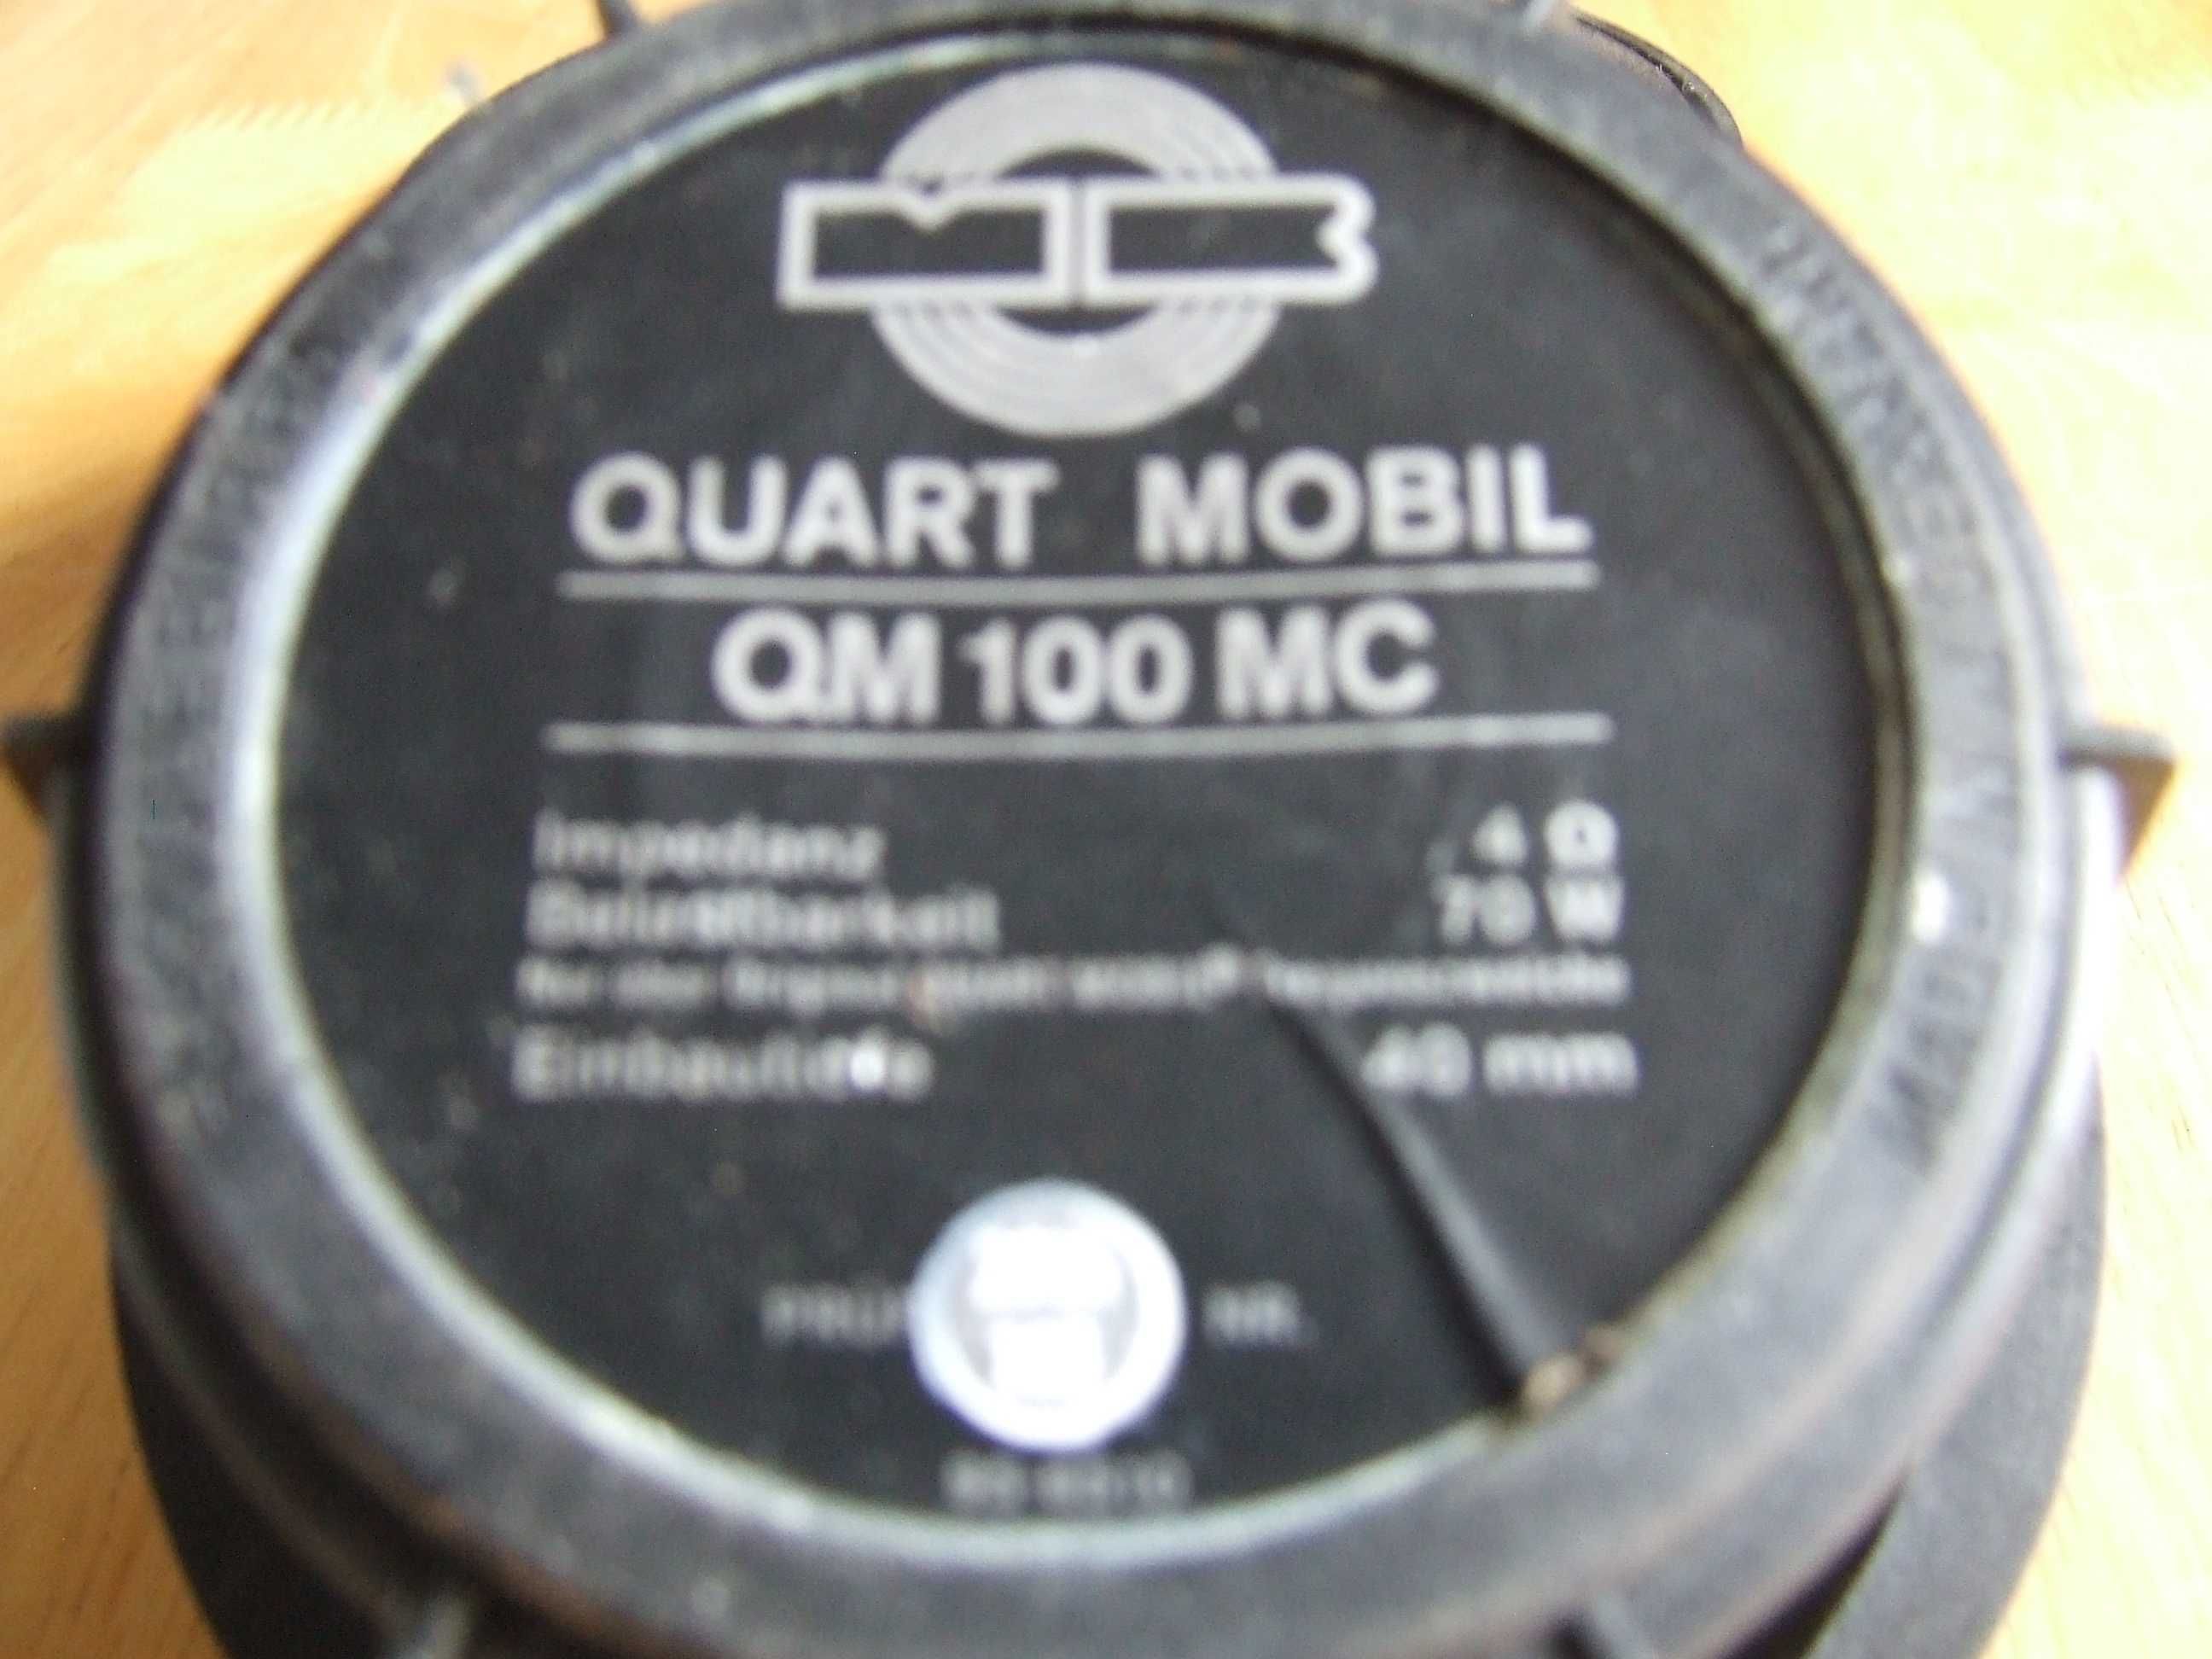 Głośniki Quart Mobil QM 100 MC